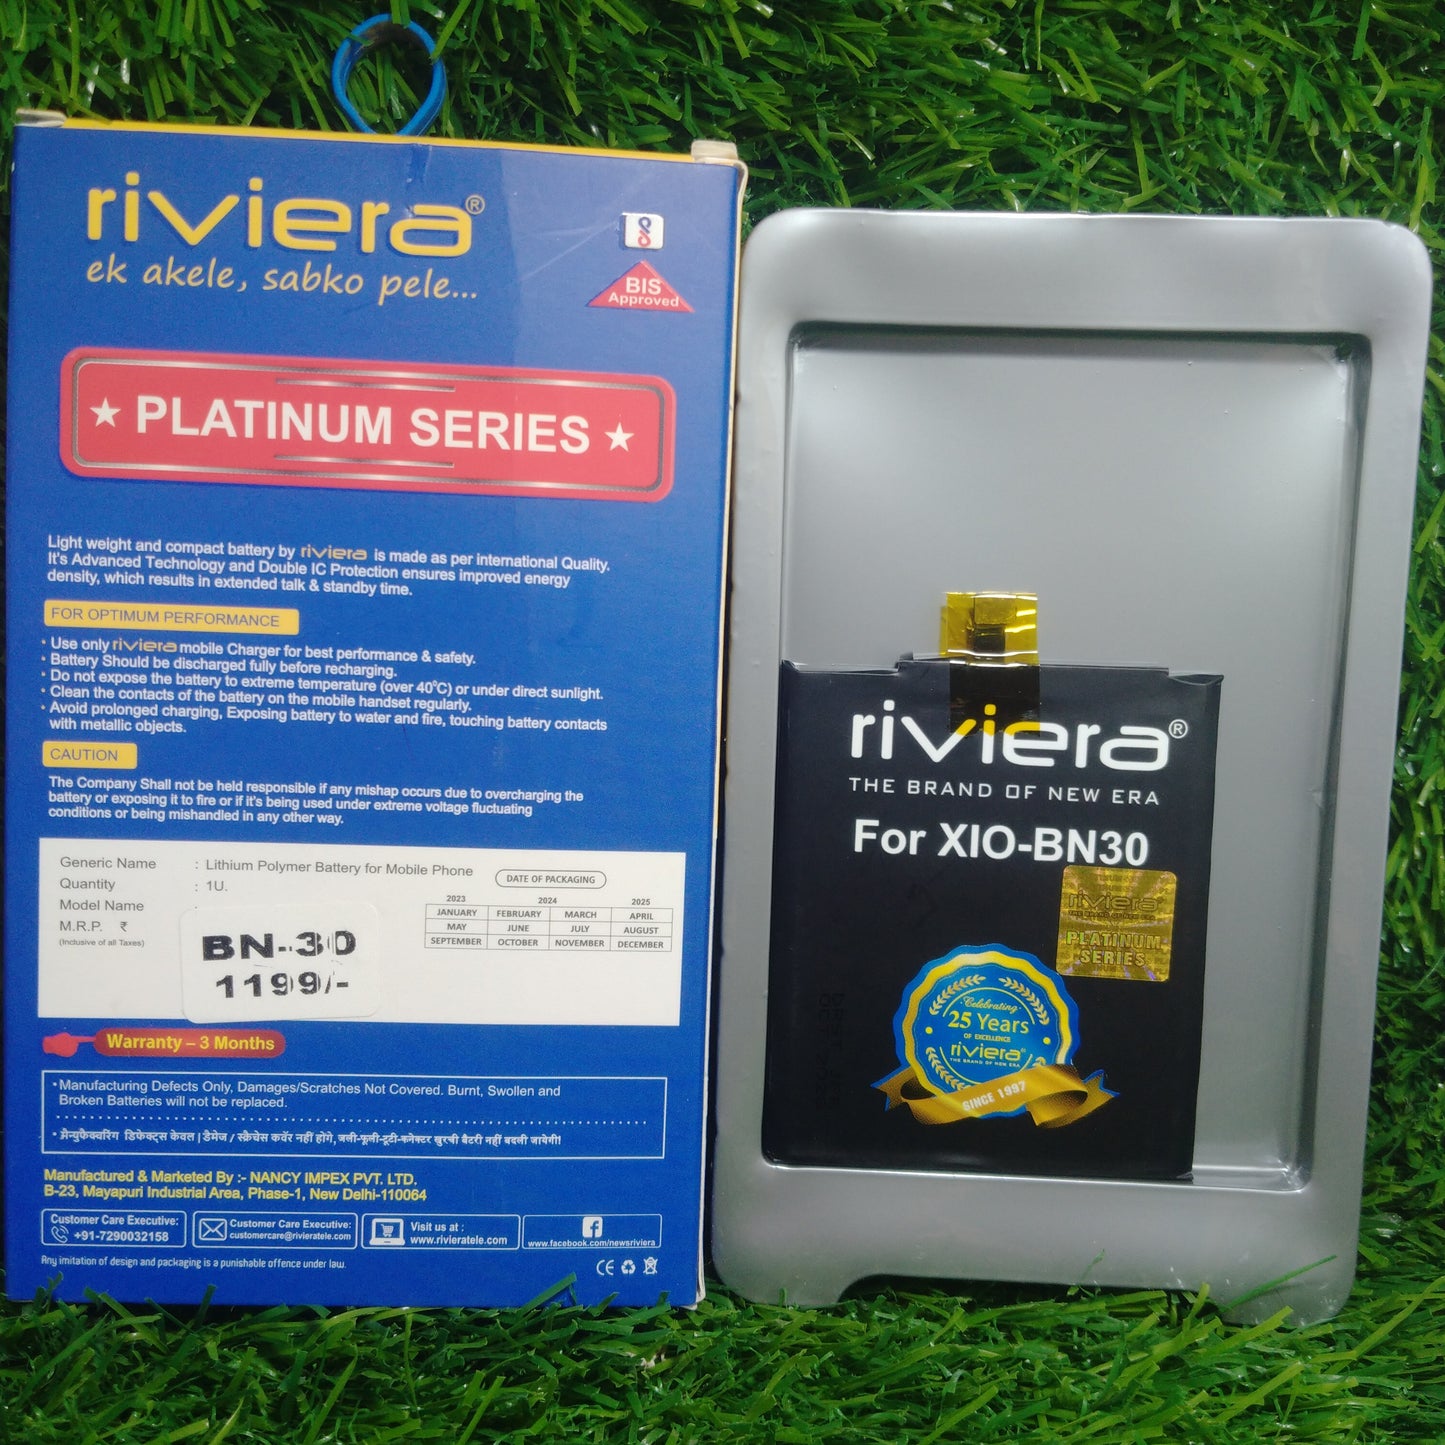 Riviera XIO-BN30 Battery